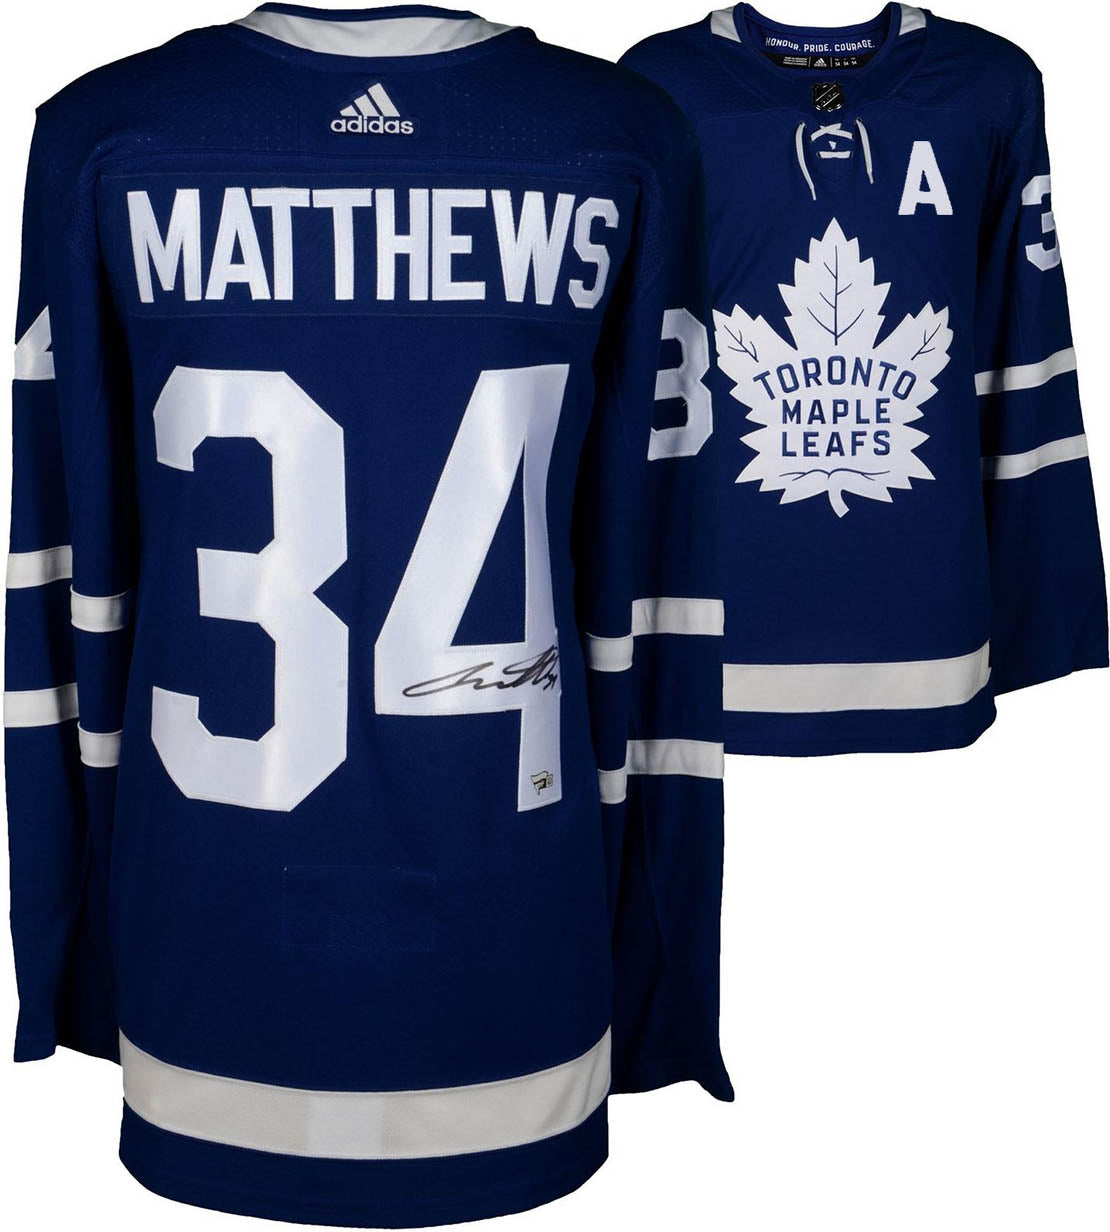 Auston Matthews Signed Maple Leafs Jersey (Fanatics Hologram